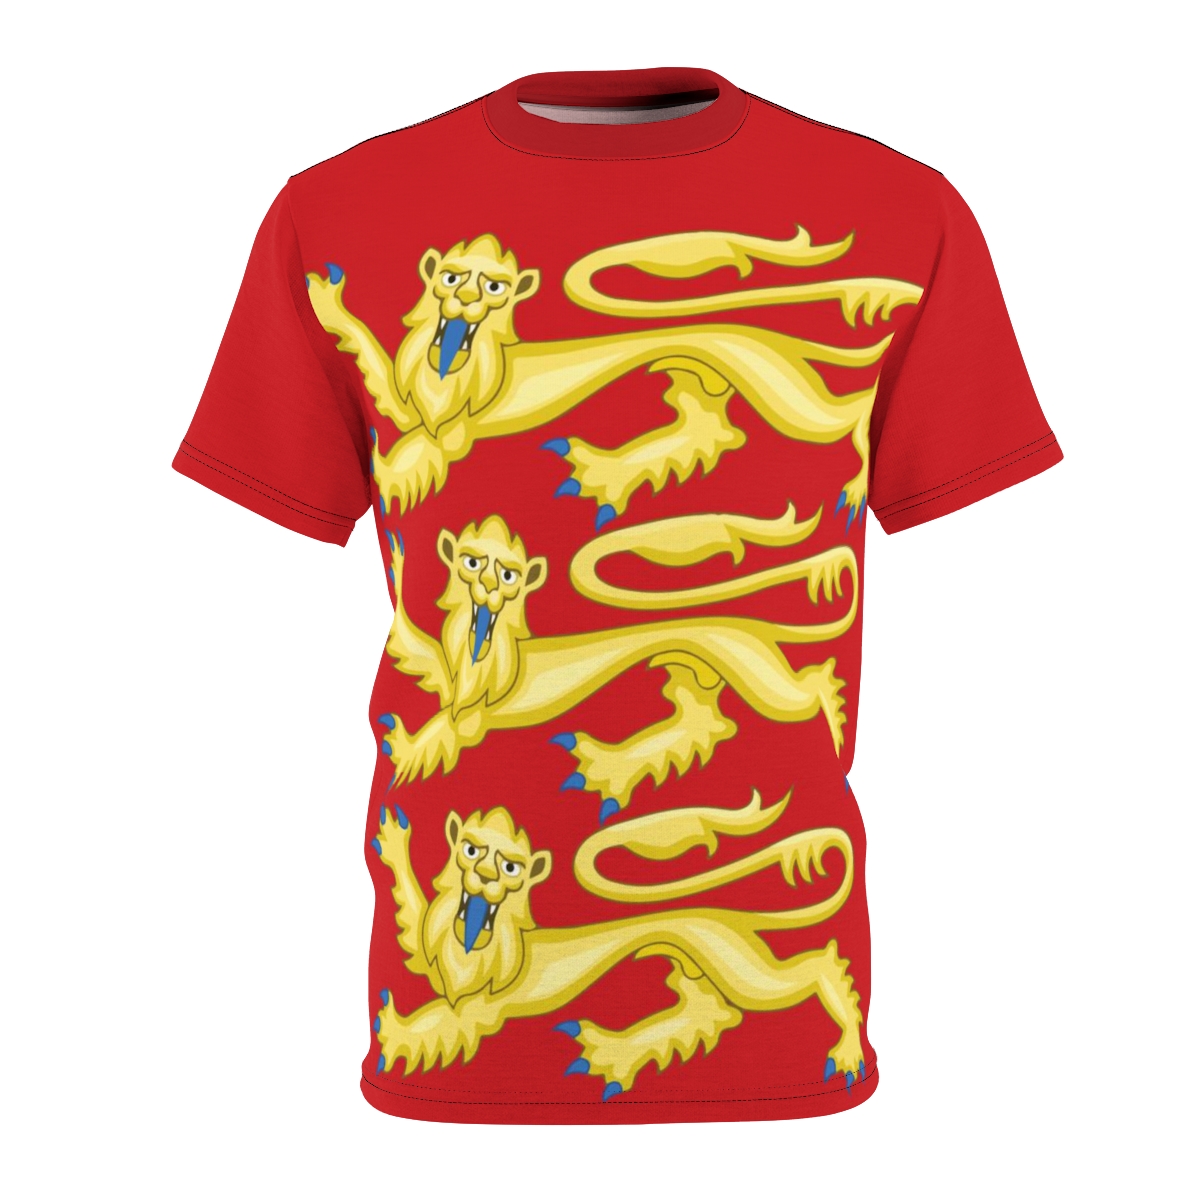 Plantagenet Lions, Unisex T-shirt, Royal Arms of England | eBay